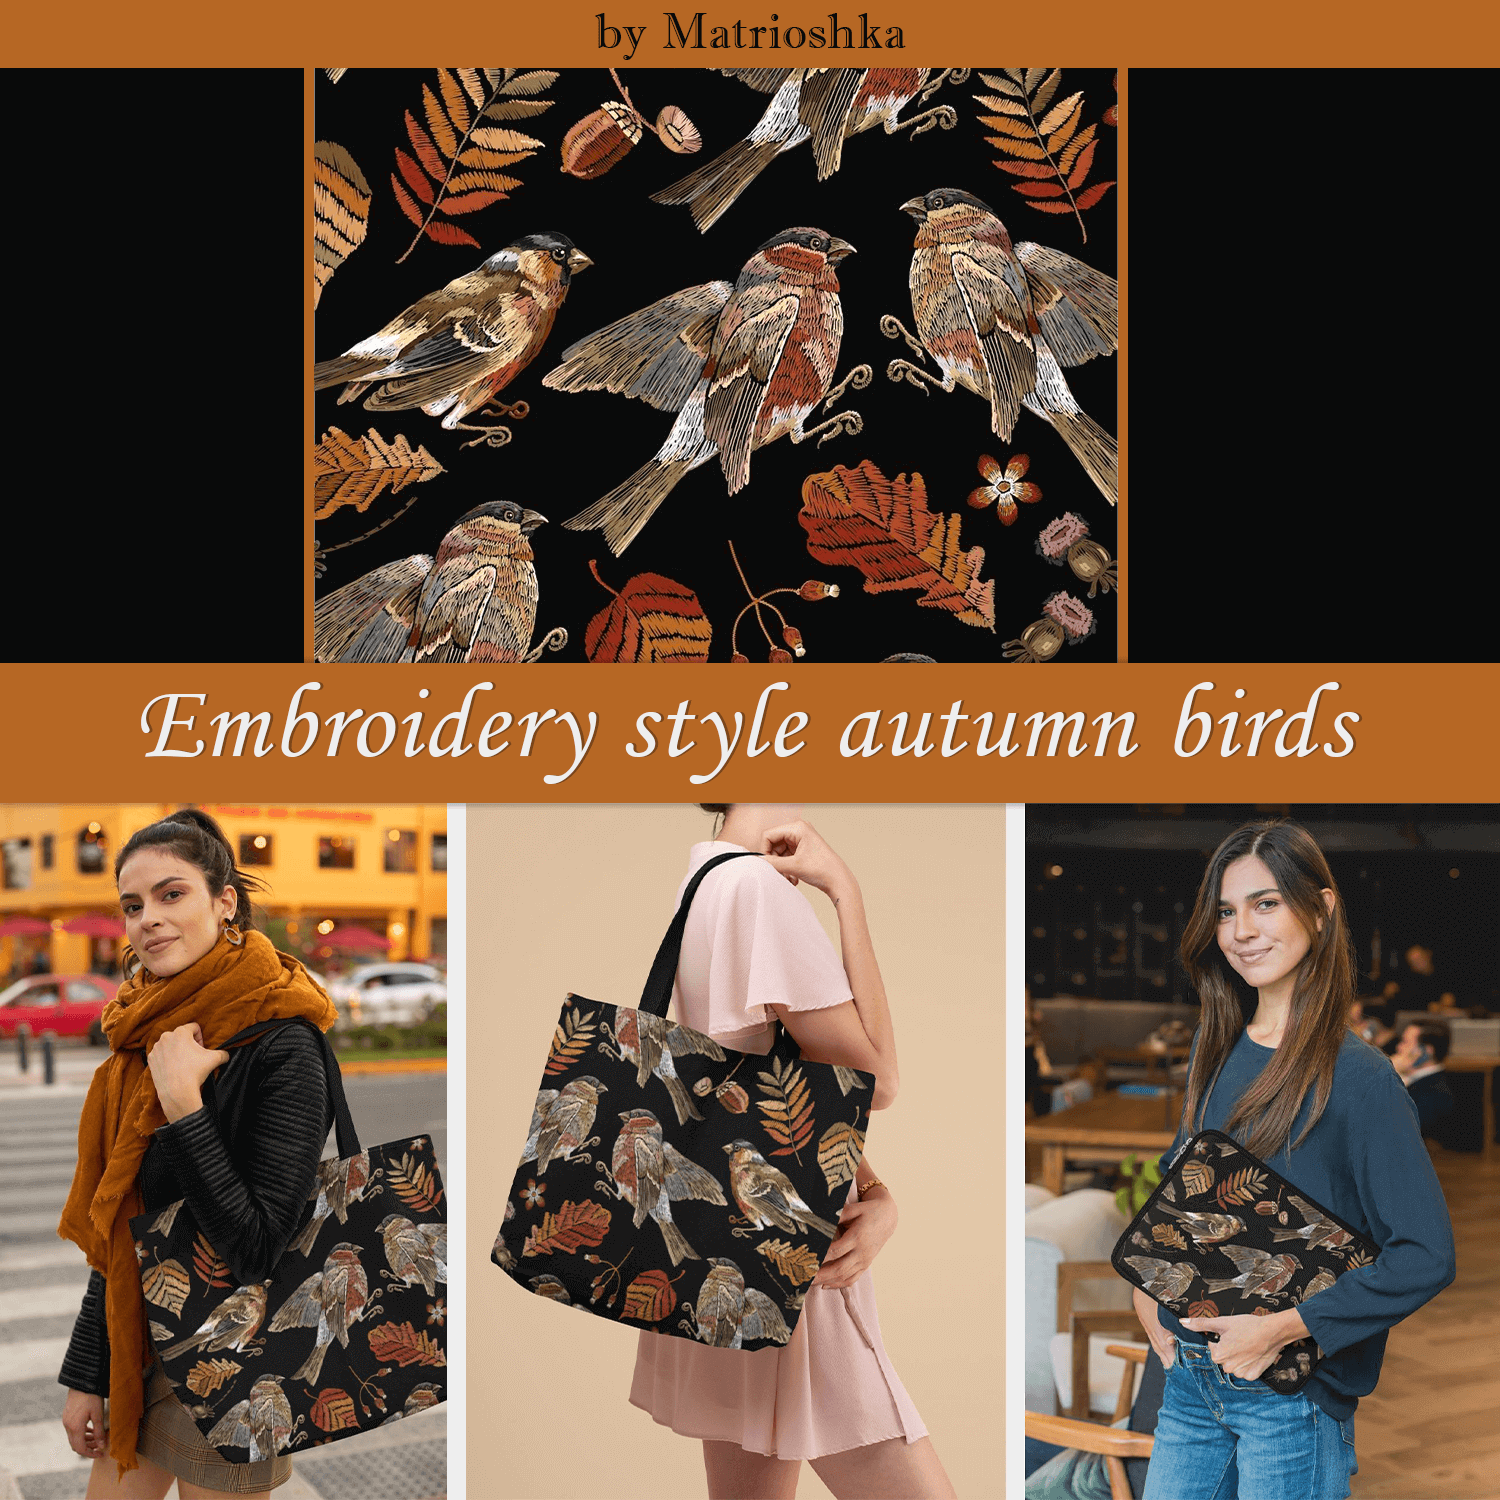 Embroidery style autumn birds by Matrioshka.